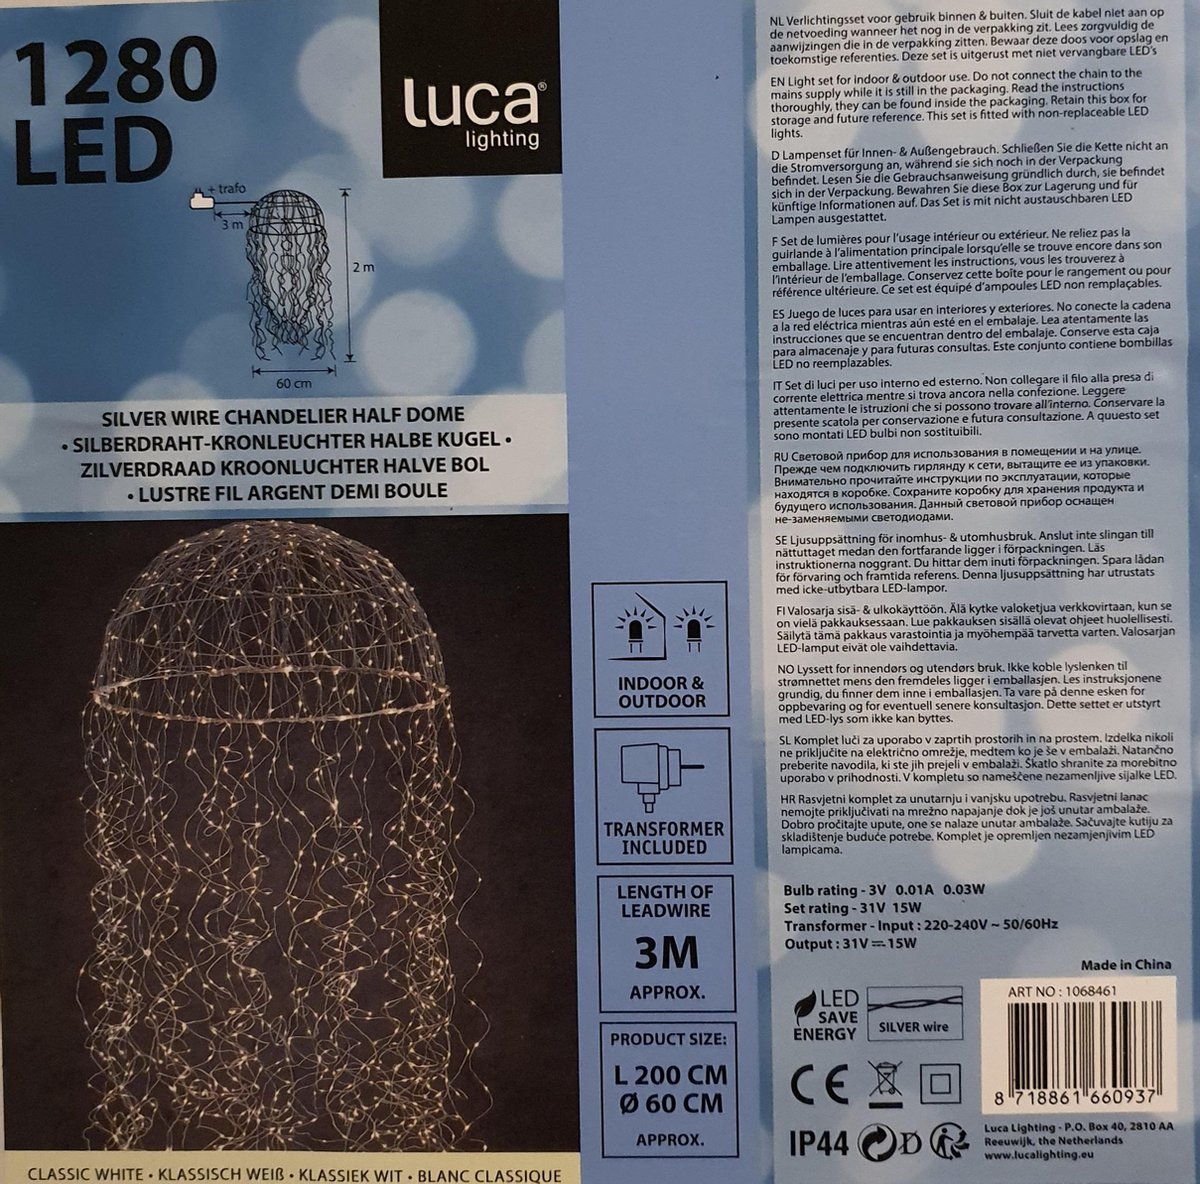 Luca Lighting - Lustre méduse argent blanc chaud 1280led IP44 - l200xd60cm  | bol.com